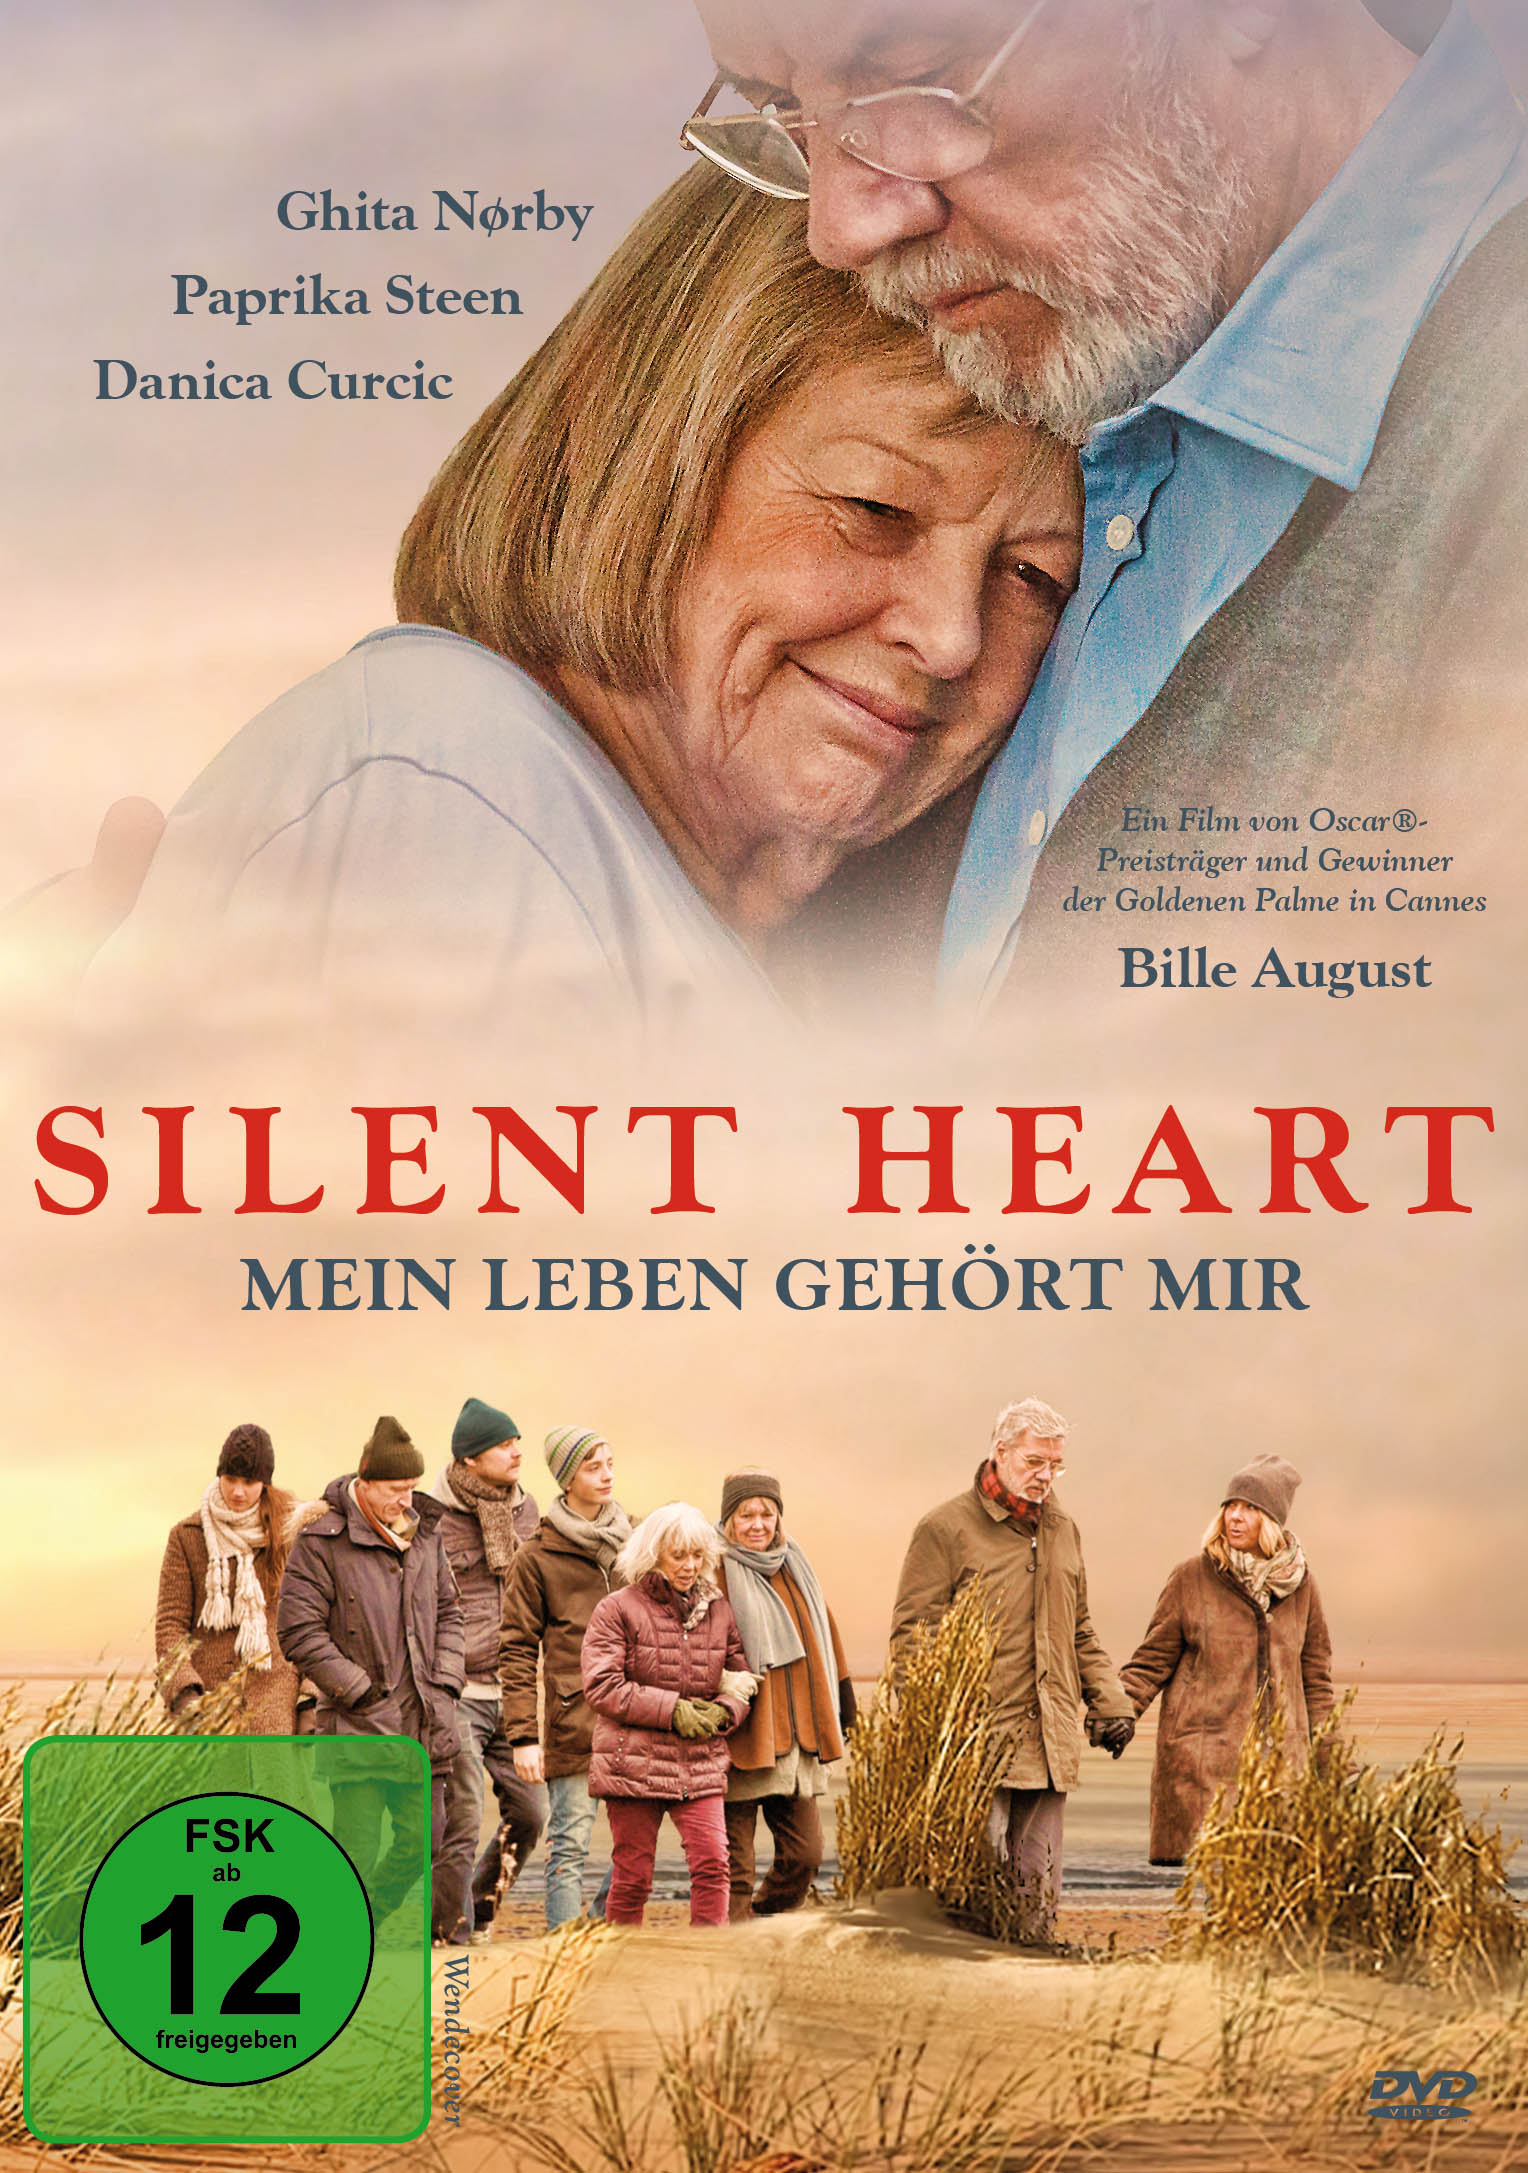 Silent Heart - Mein mir Leben gehört DVD